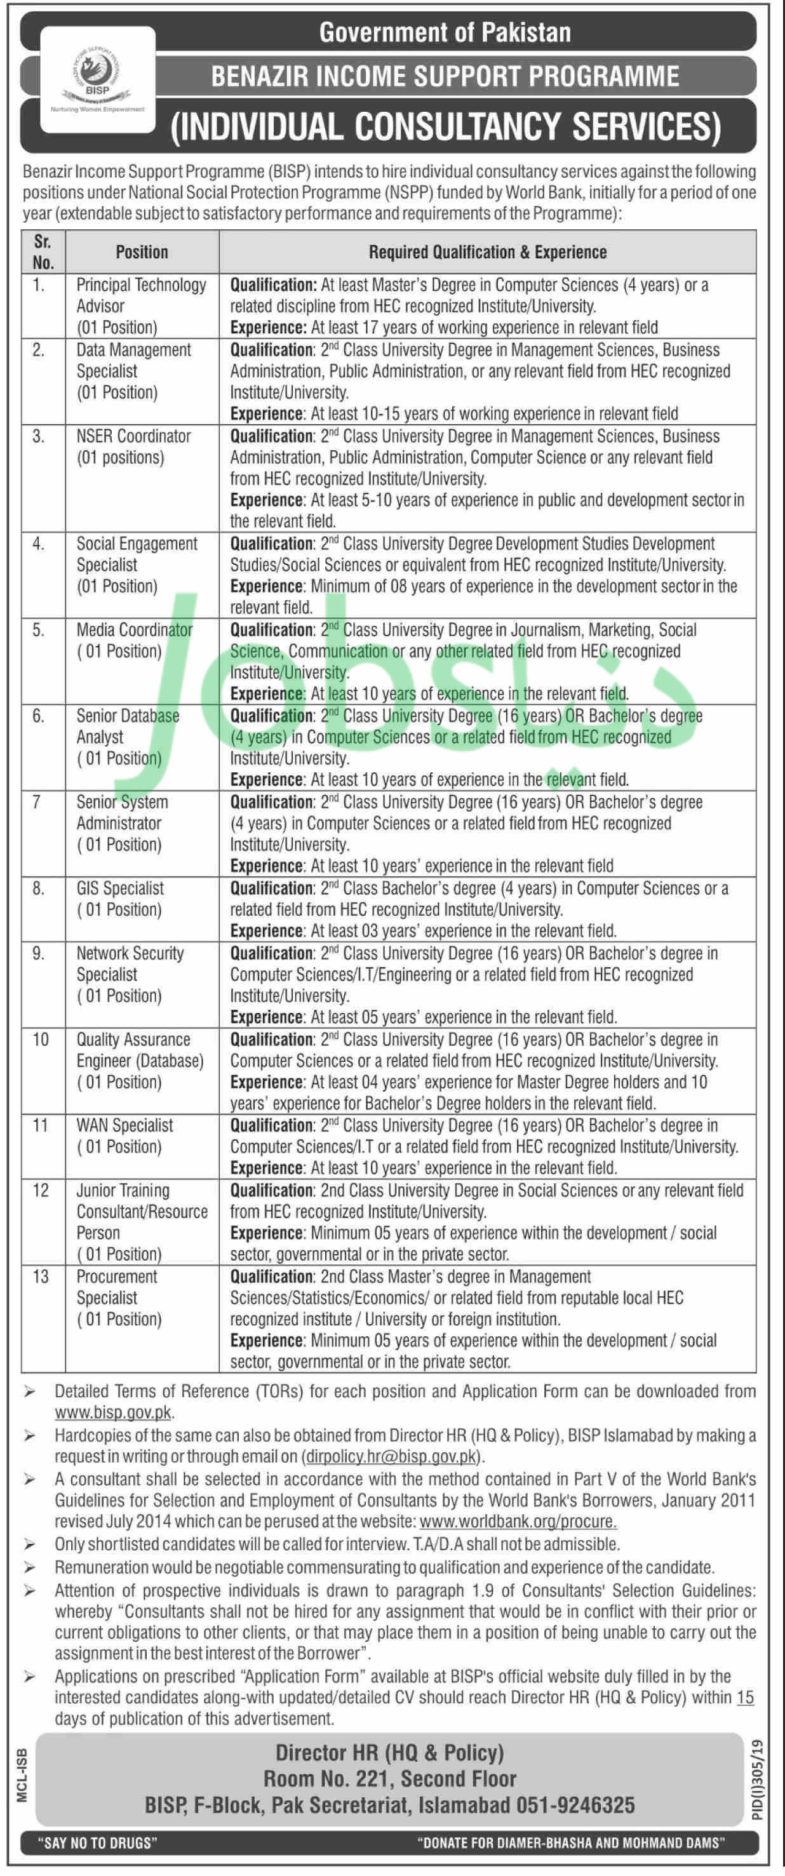 Benazir Income Support Programme (BISP) Jobs 2019 for 13+ Posts (Multiple Categories)